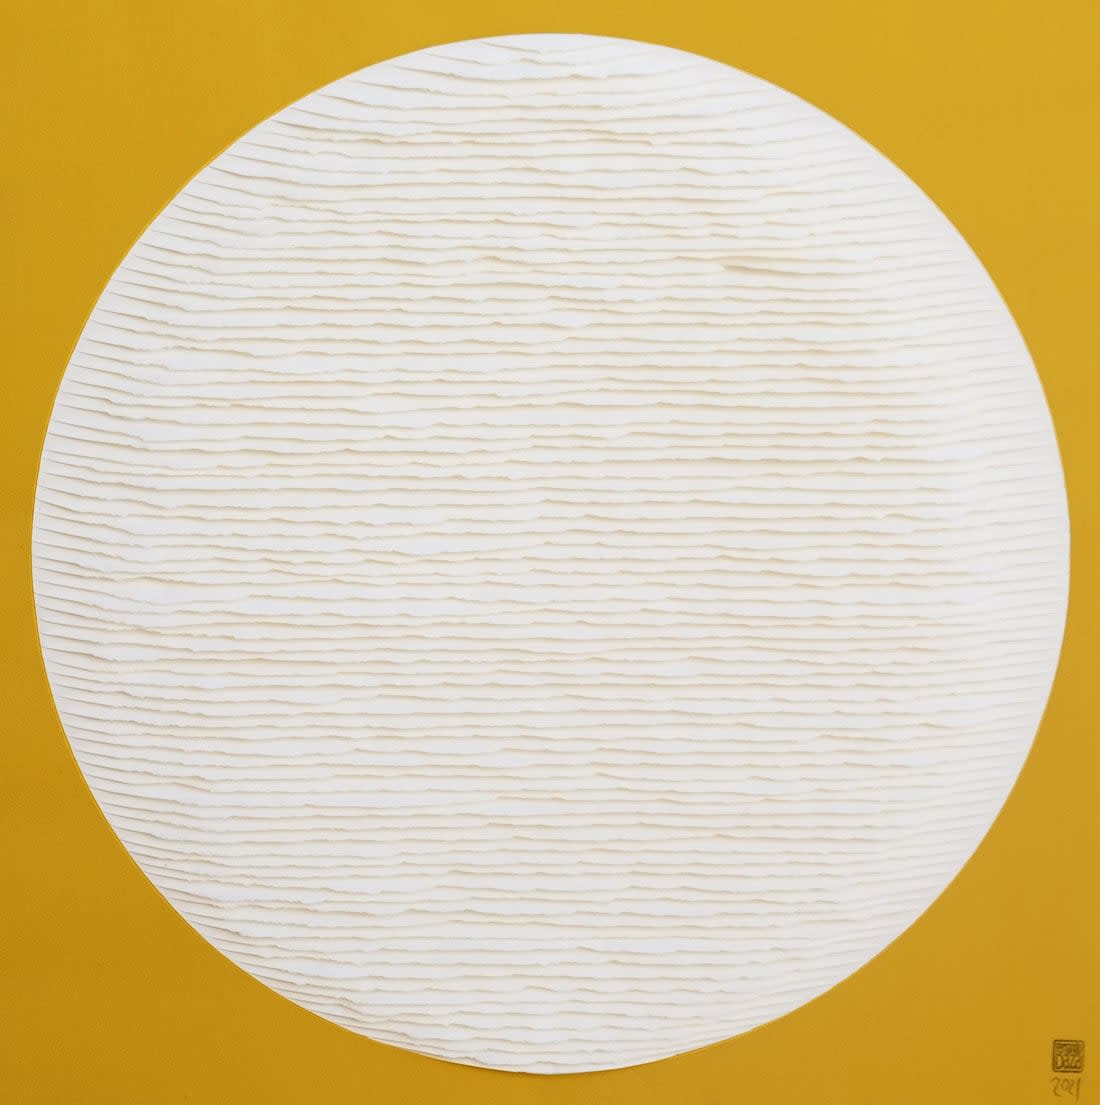 Image of Rond blanc sur fond jaune